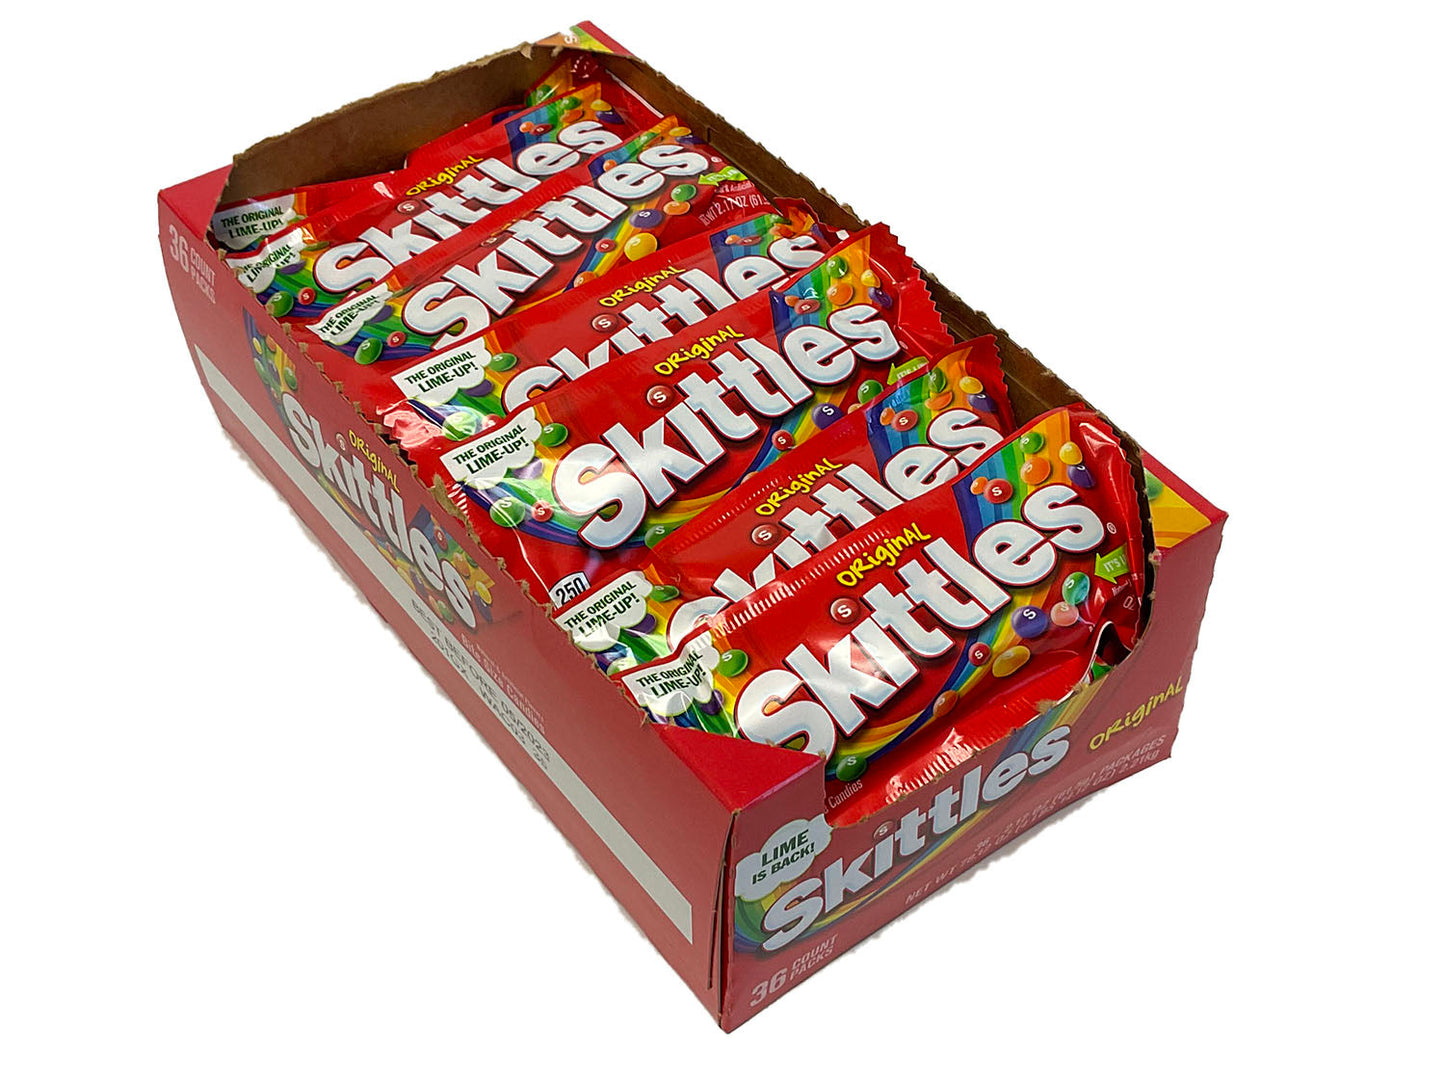 Skittles Original - 2.17 oz pkg - box of 36 open